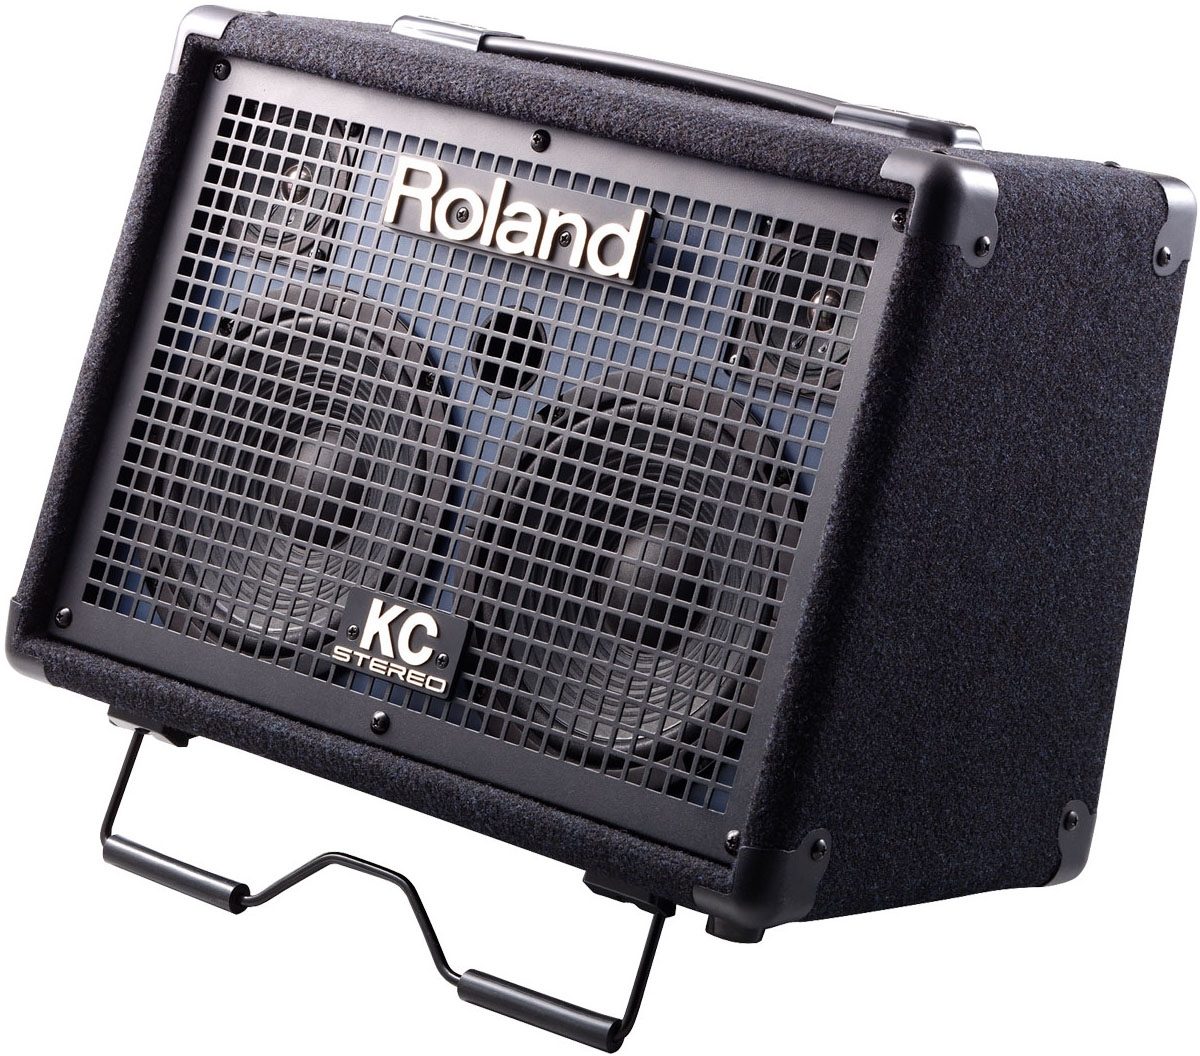 Roland KC-110 Keyboard Amplifier | zZounds